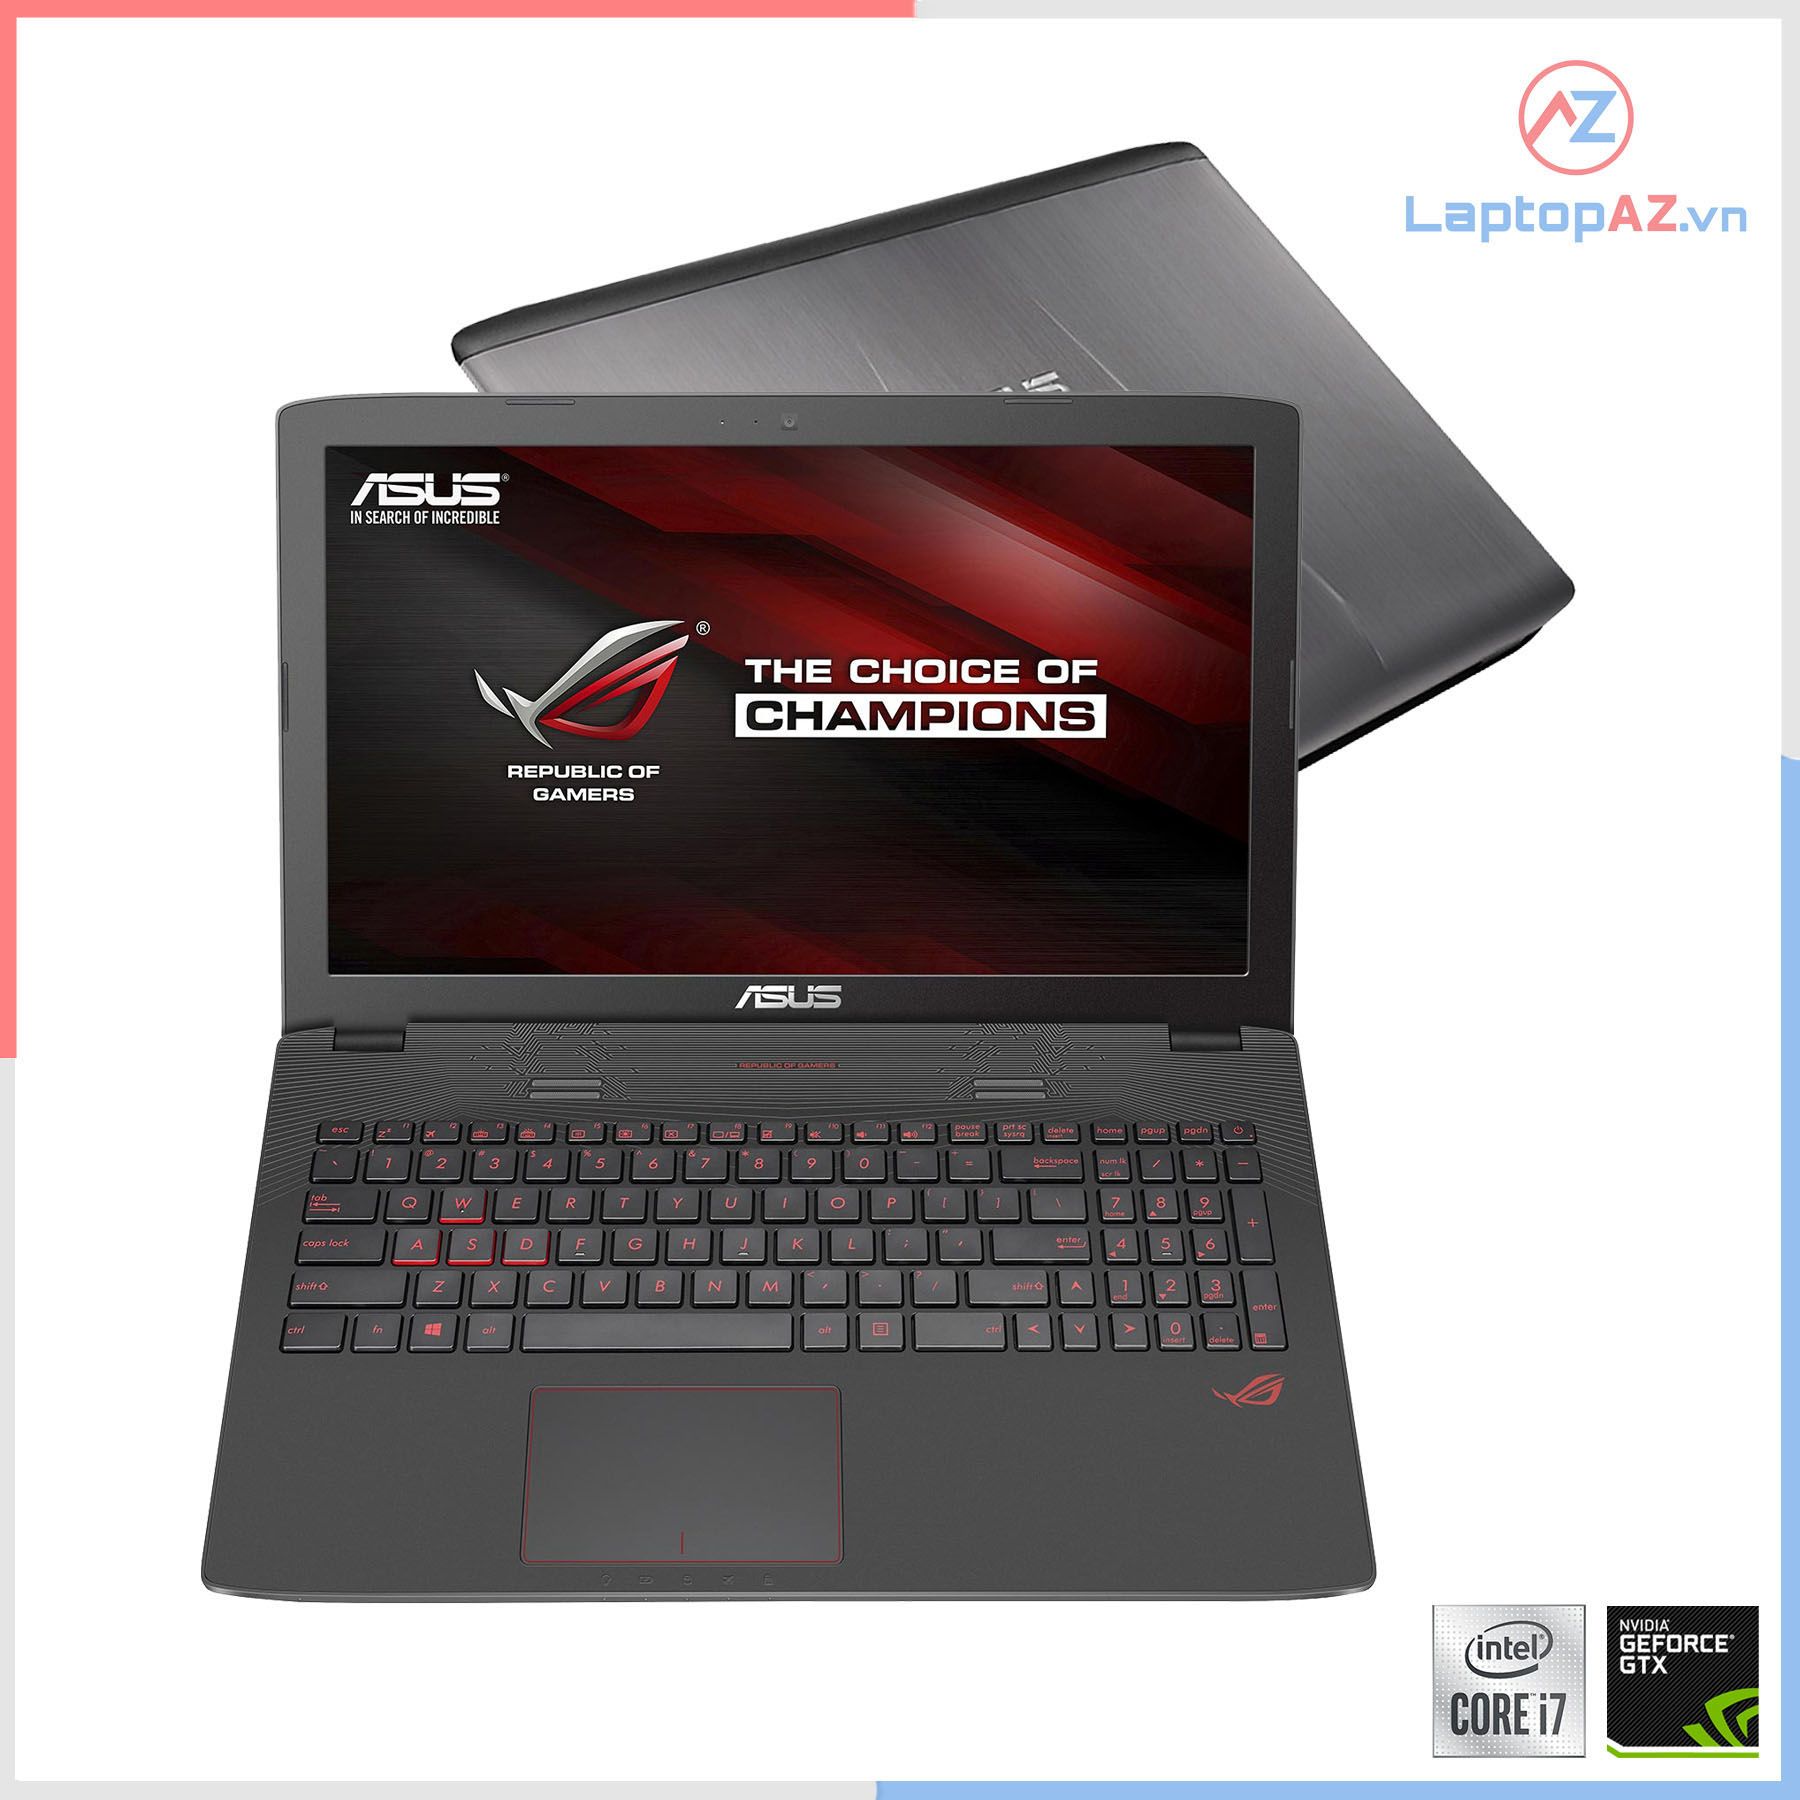 Laptop Asus GL752VL-T4057D (Core i7-6700HQ, 8GB, 1TB, VGA 4GB NVIDIA Geforce GTX 965M, 17.3 inch, Full HD + IPS)